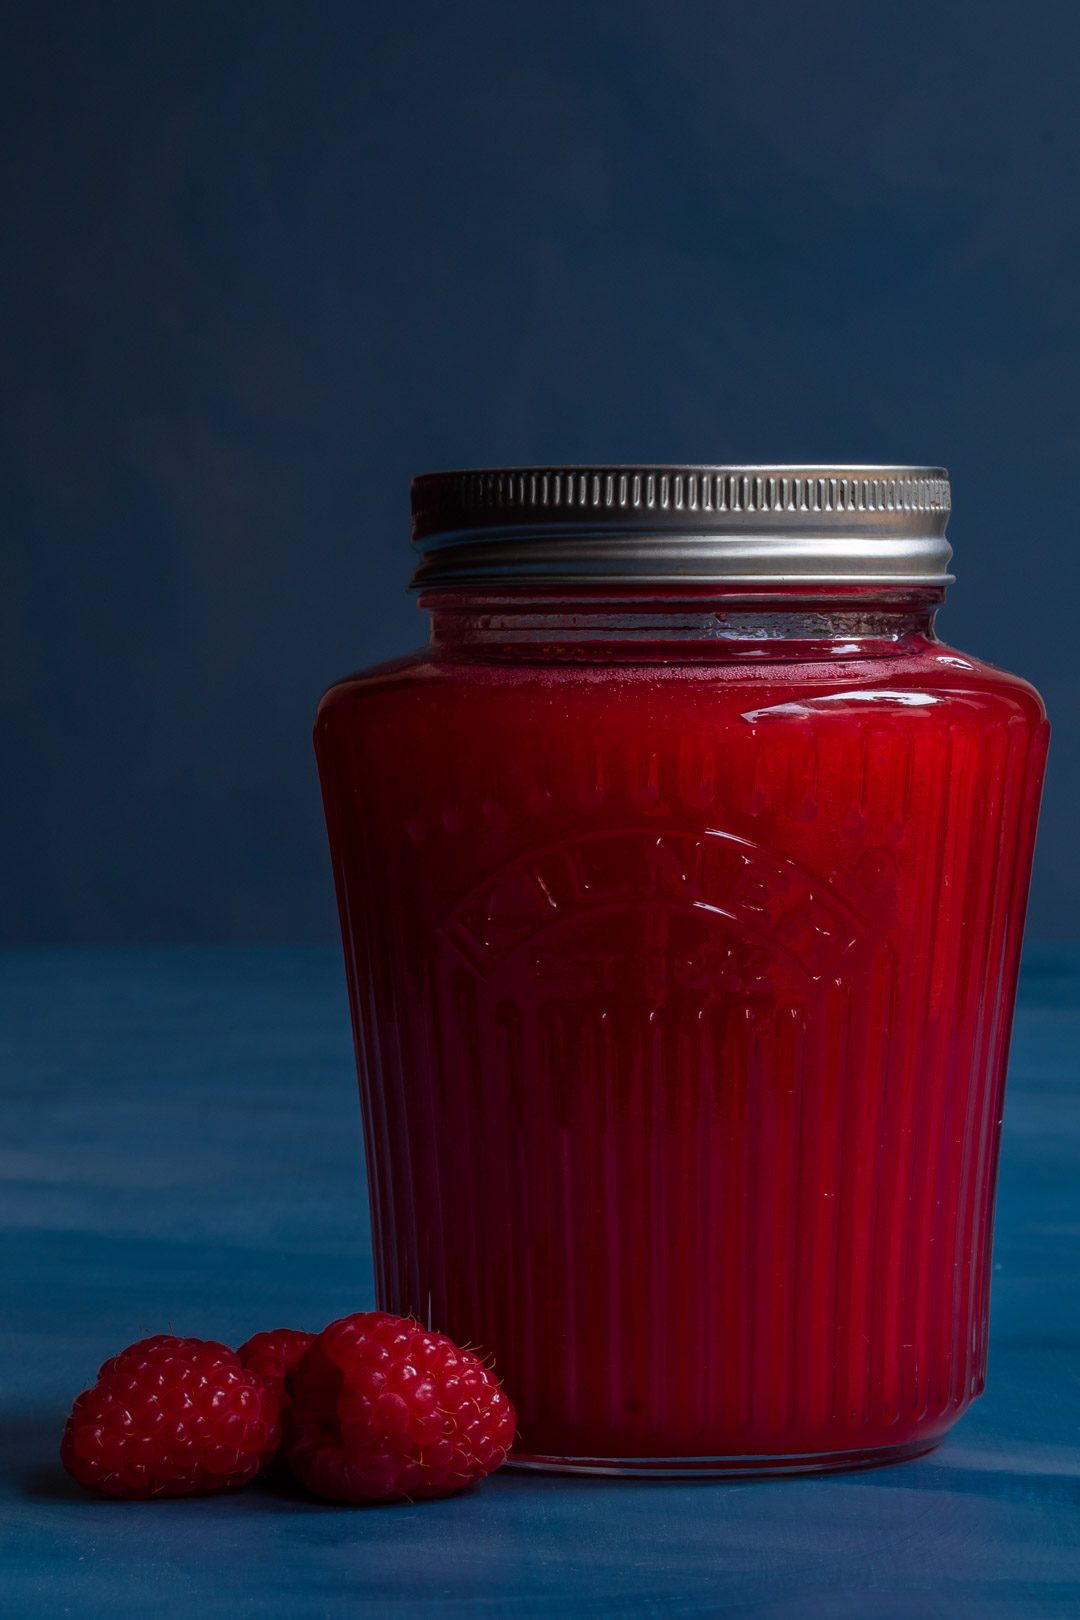 Raspberry shrub syrup drinking vinegar in vintage style preserving jar